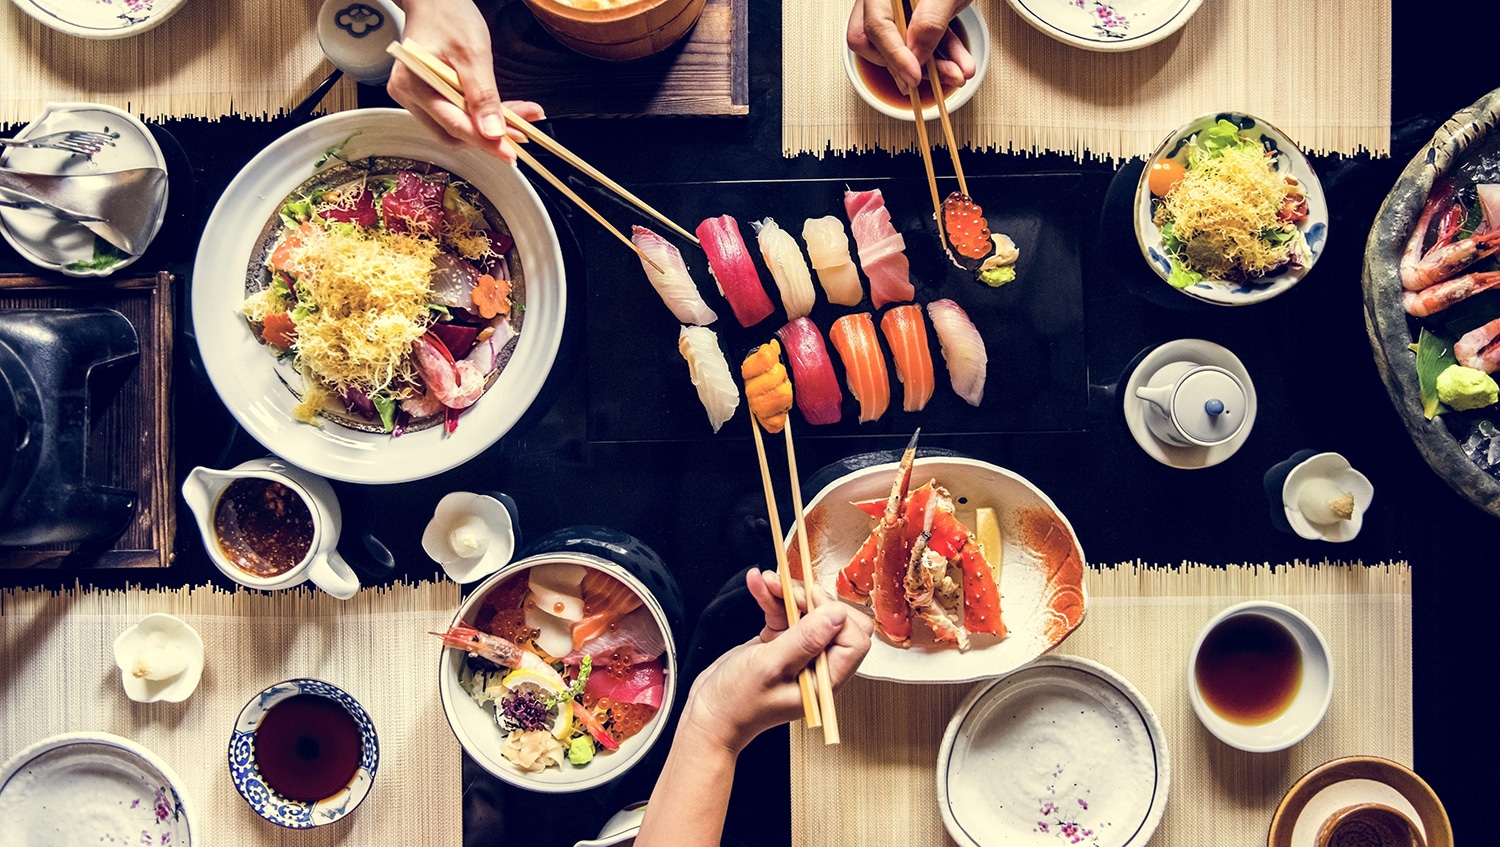 A feast of Japanese food